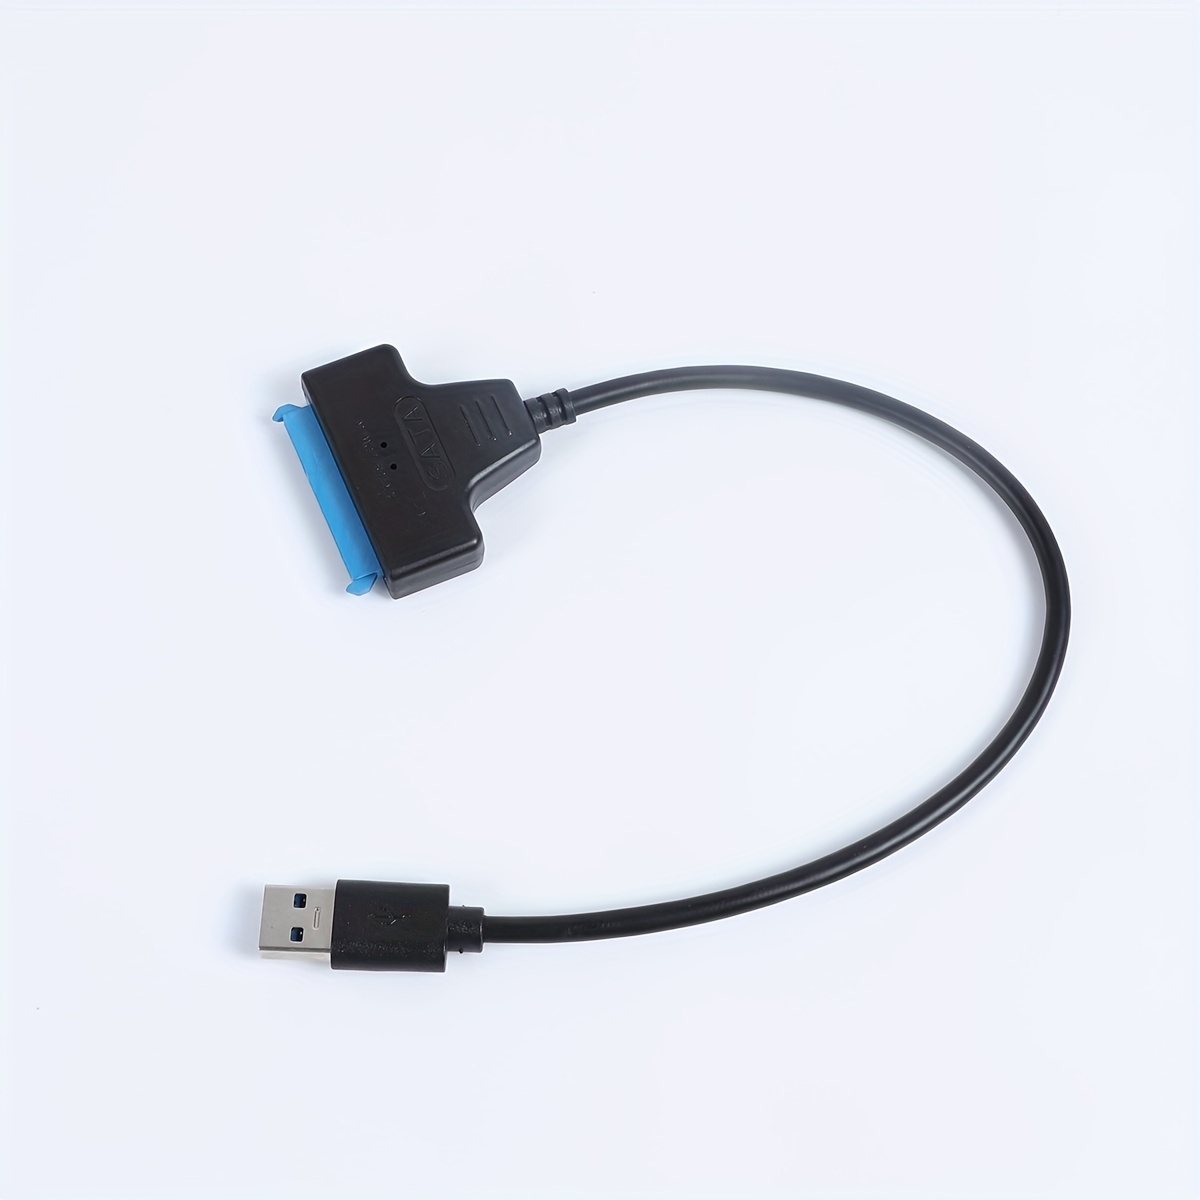 SATA to USB Cable,USB 3.0 to SATA III Hard Drive Adapter Converter